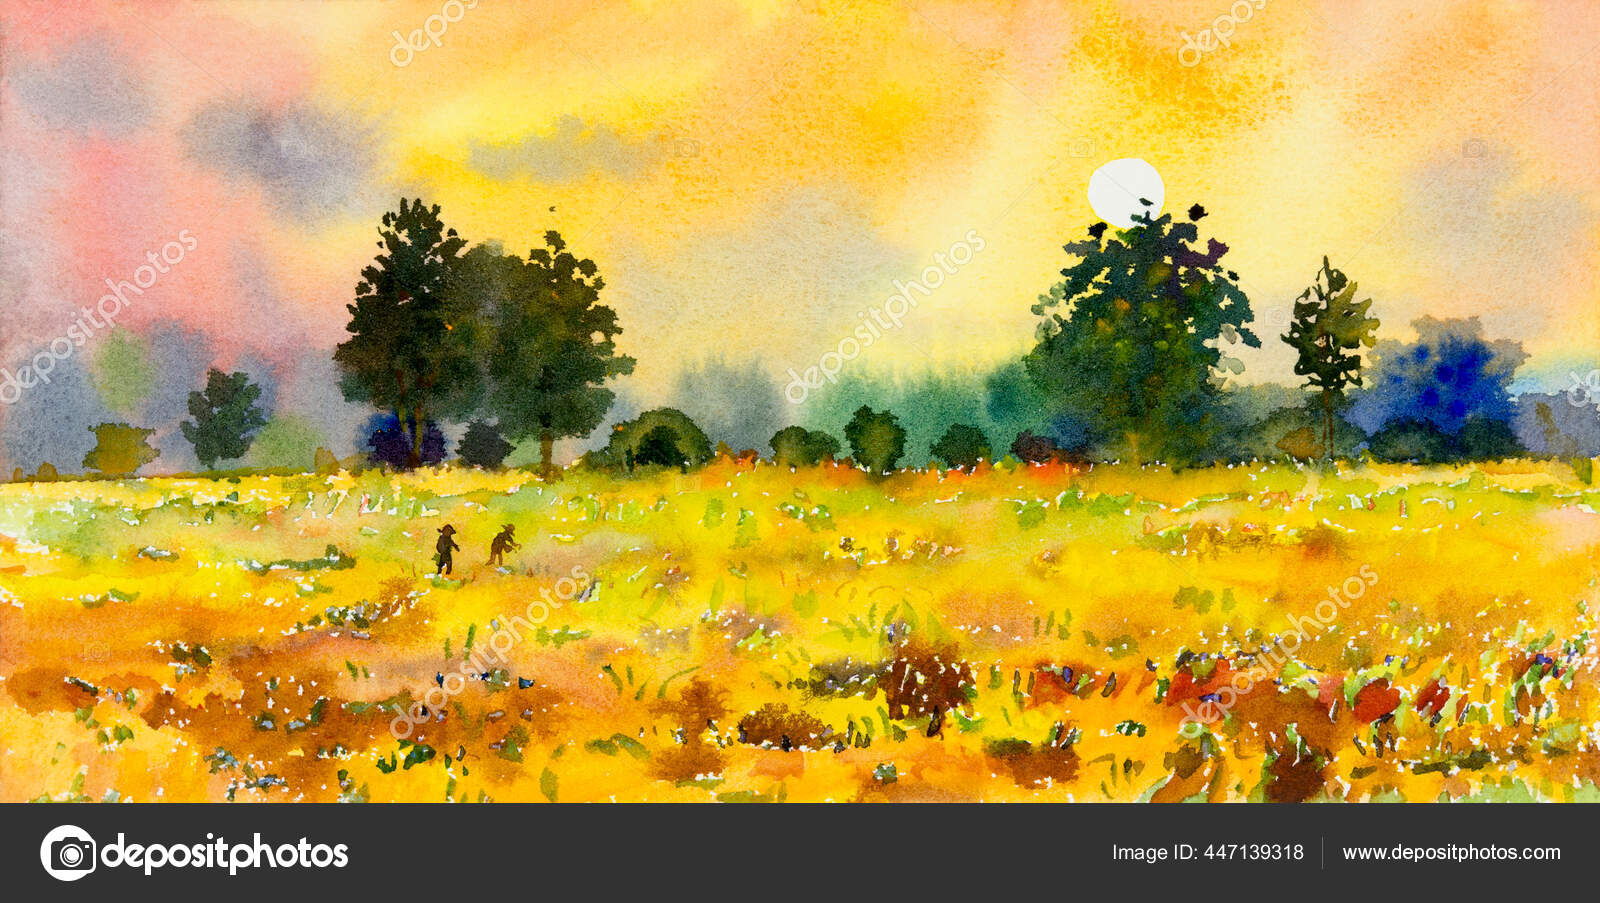 https://st2.depositphotos.com/16036968/44713/i/1600/depositphotos_447139318-stock-illustration-watercolor-landscape-painting-panorama-colorful.jpg